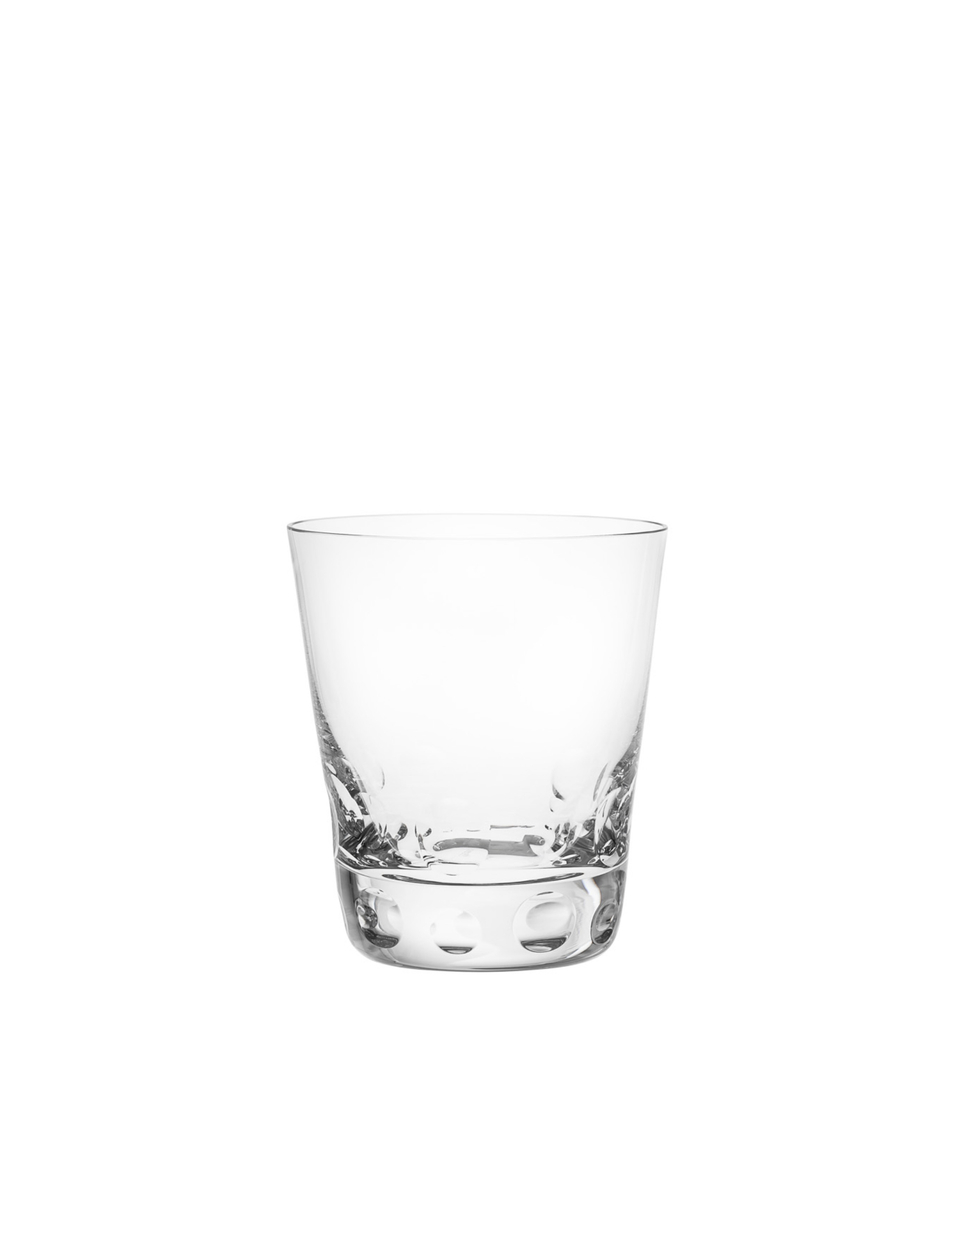 Conus glass, 370 ml